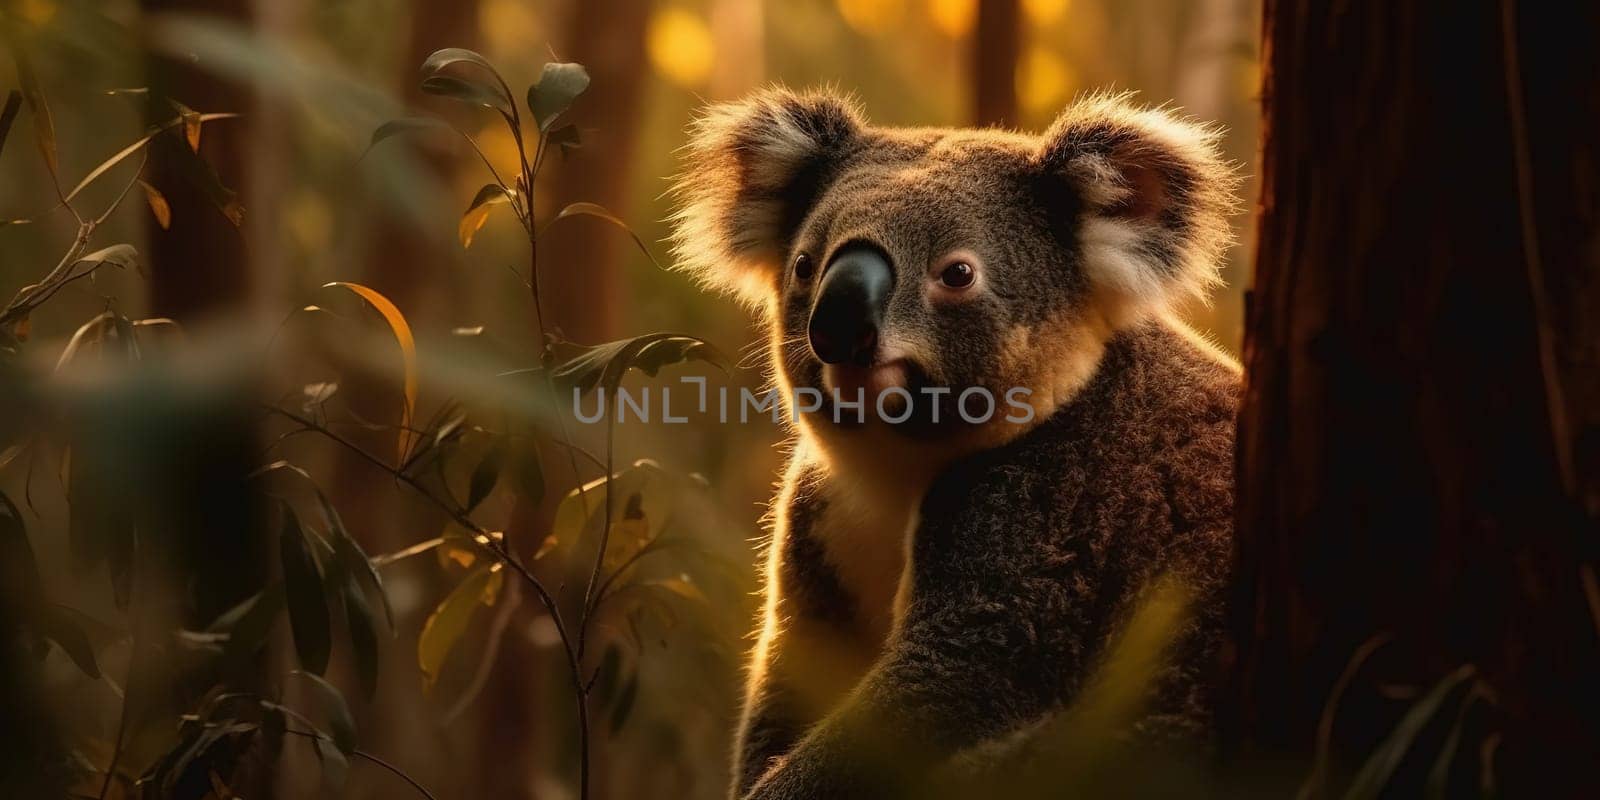 Cute Koala In The Jungle Forest In The Evening by GekaSkr